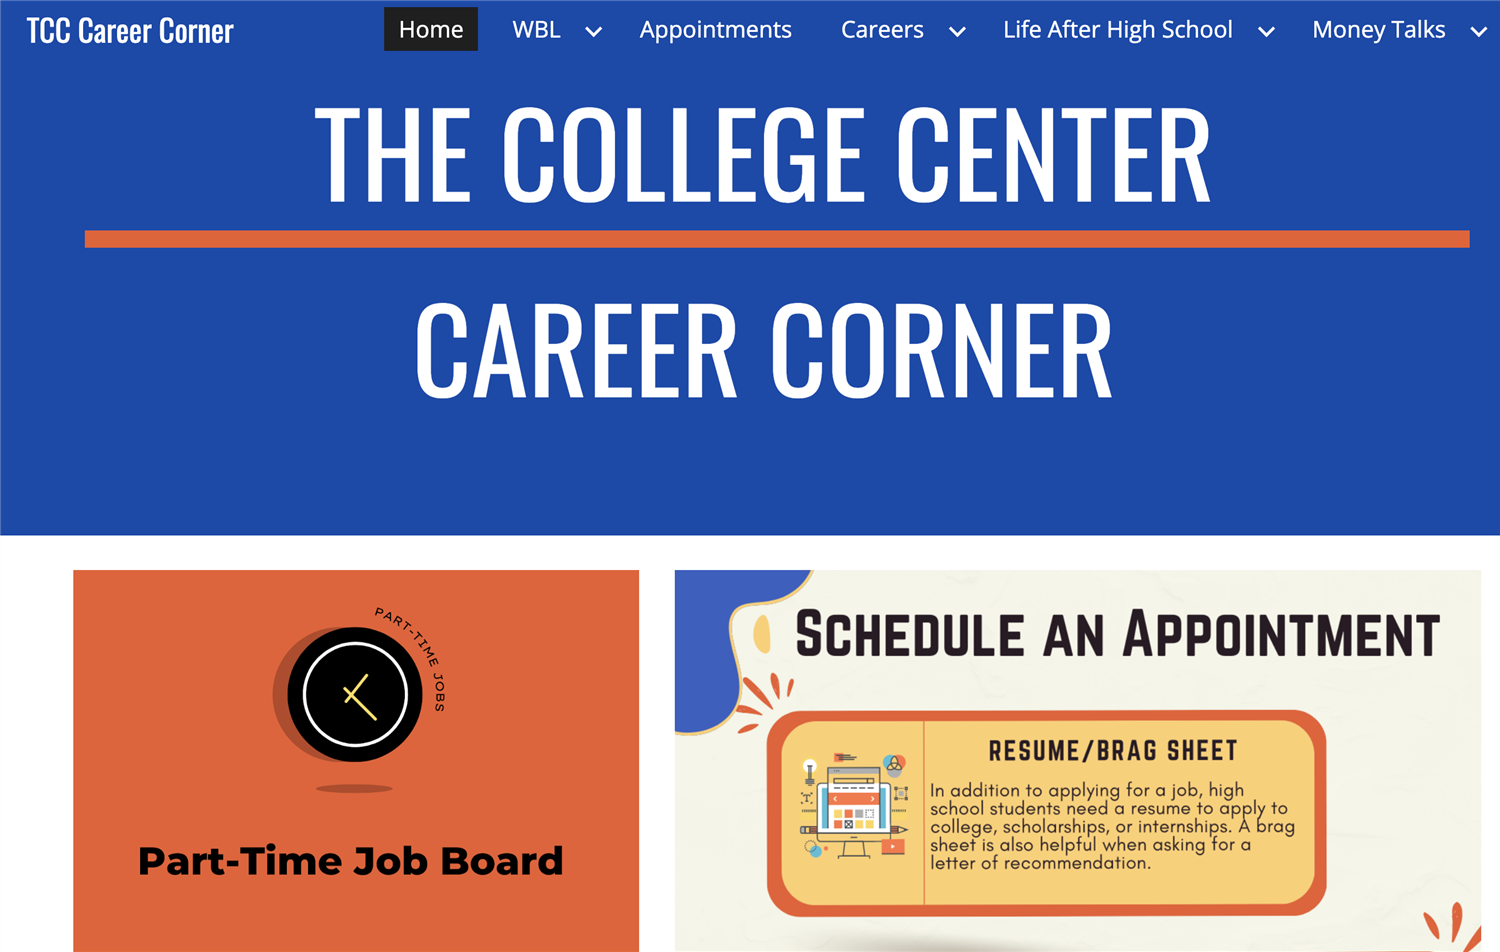 TCC Career Corner